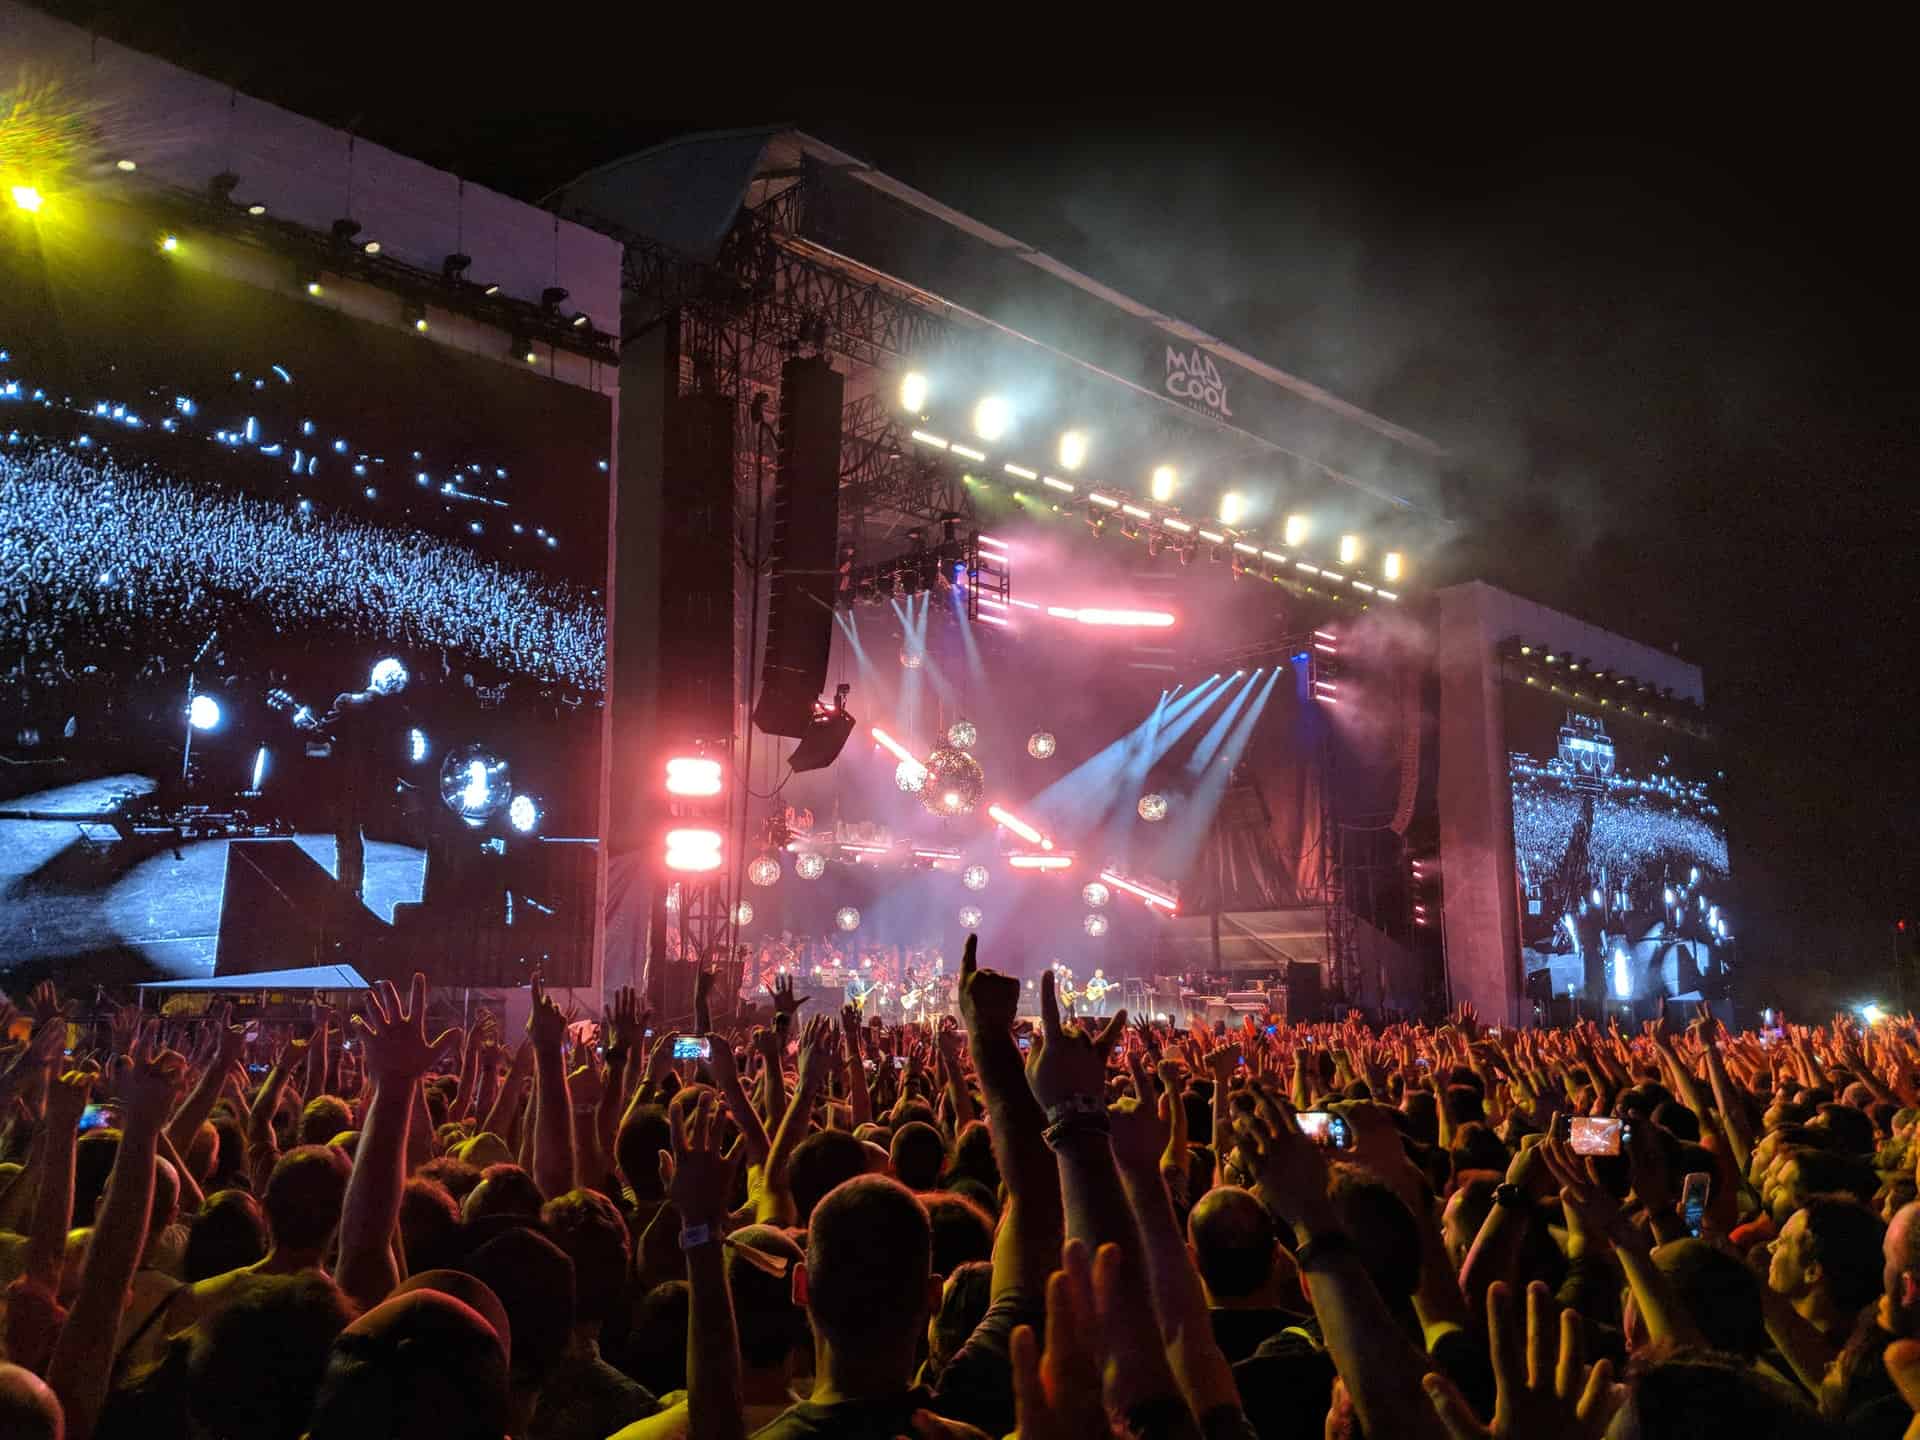 Best things to do in Madrid Spain - Javier Garcia Colomo - Pearl Jam at Mad Cool Music Festival by Arjun Kachru on Unsplash